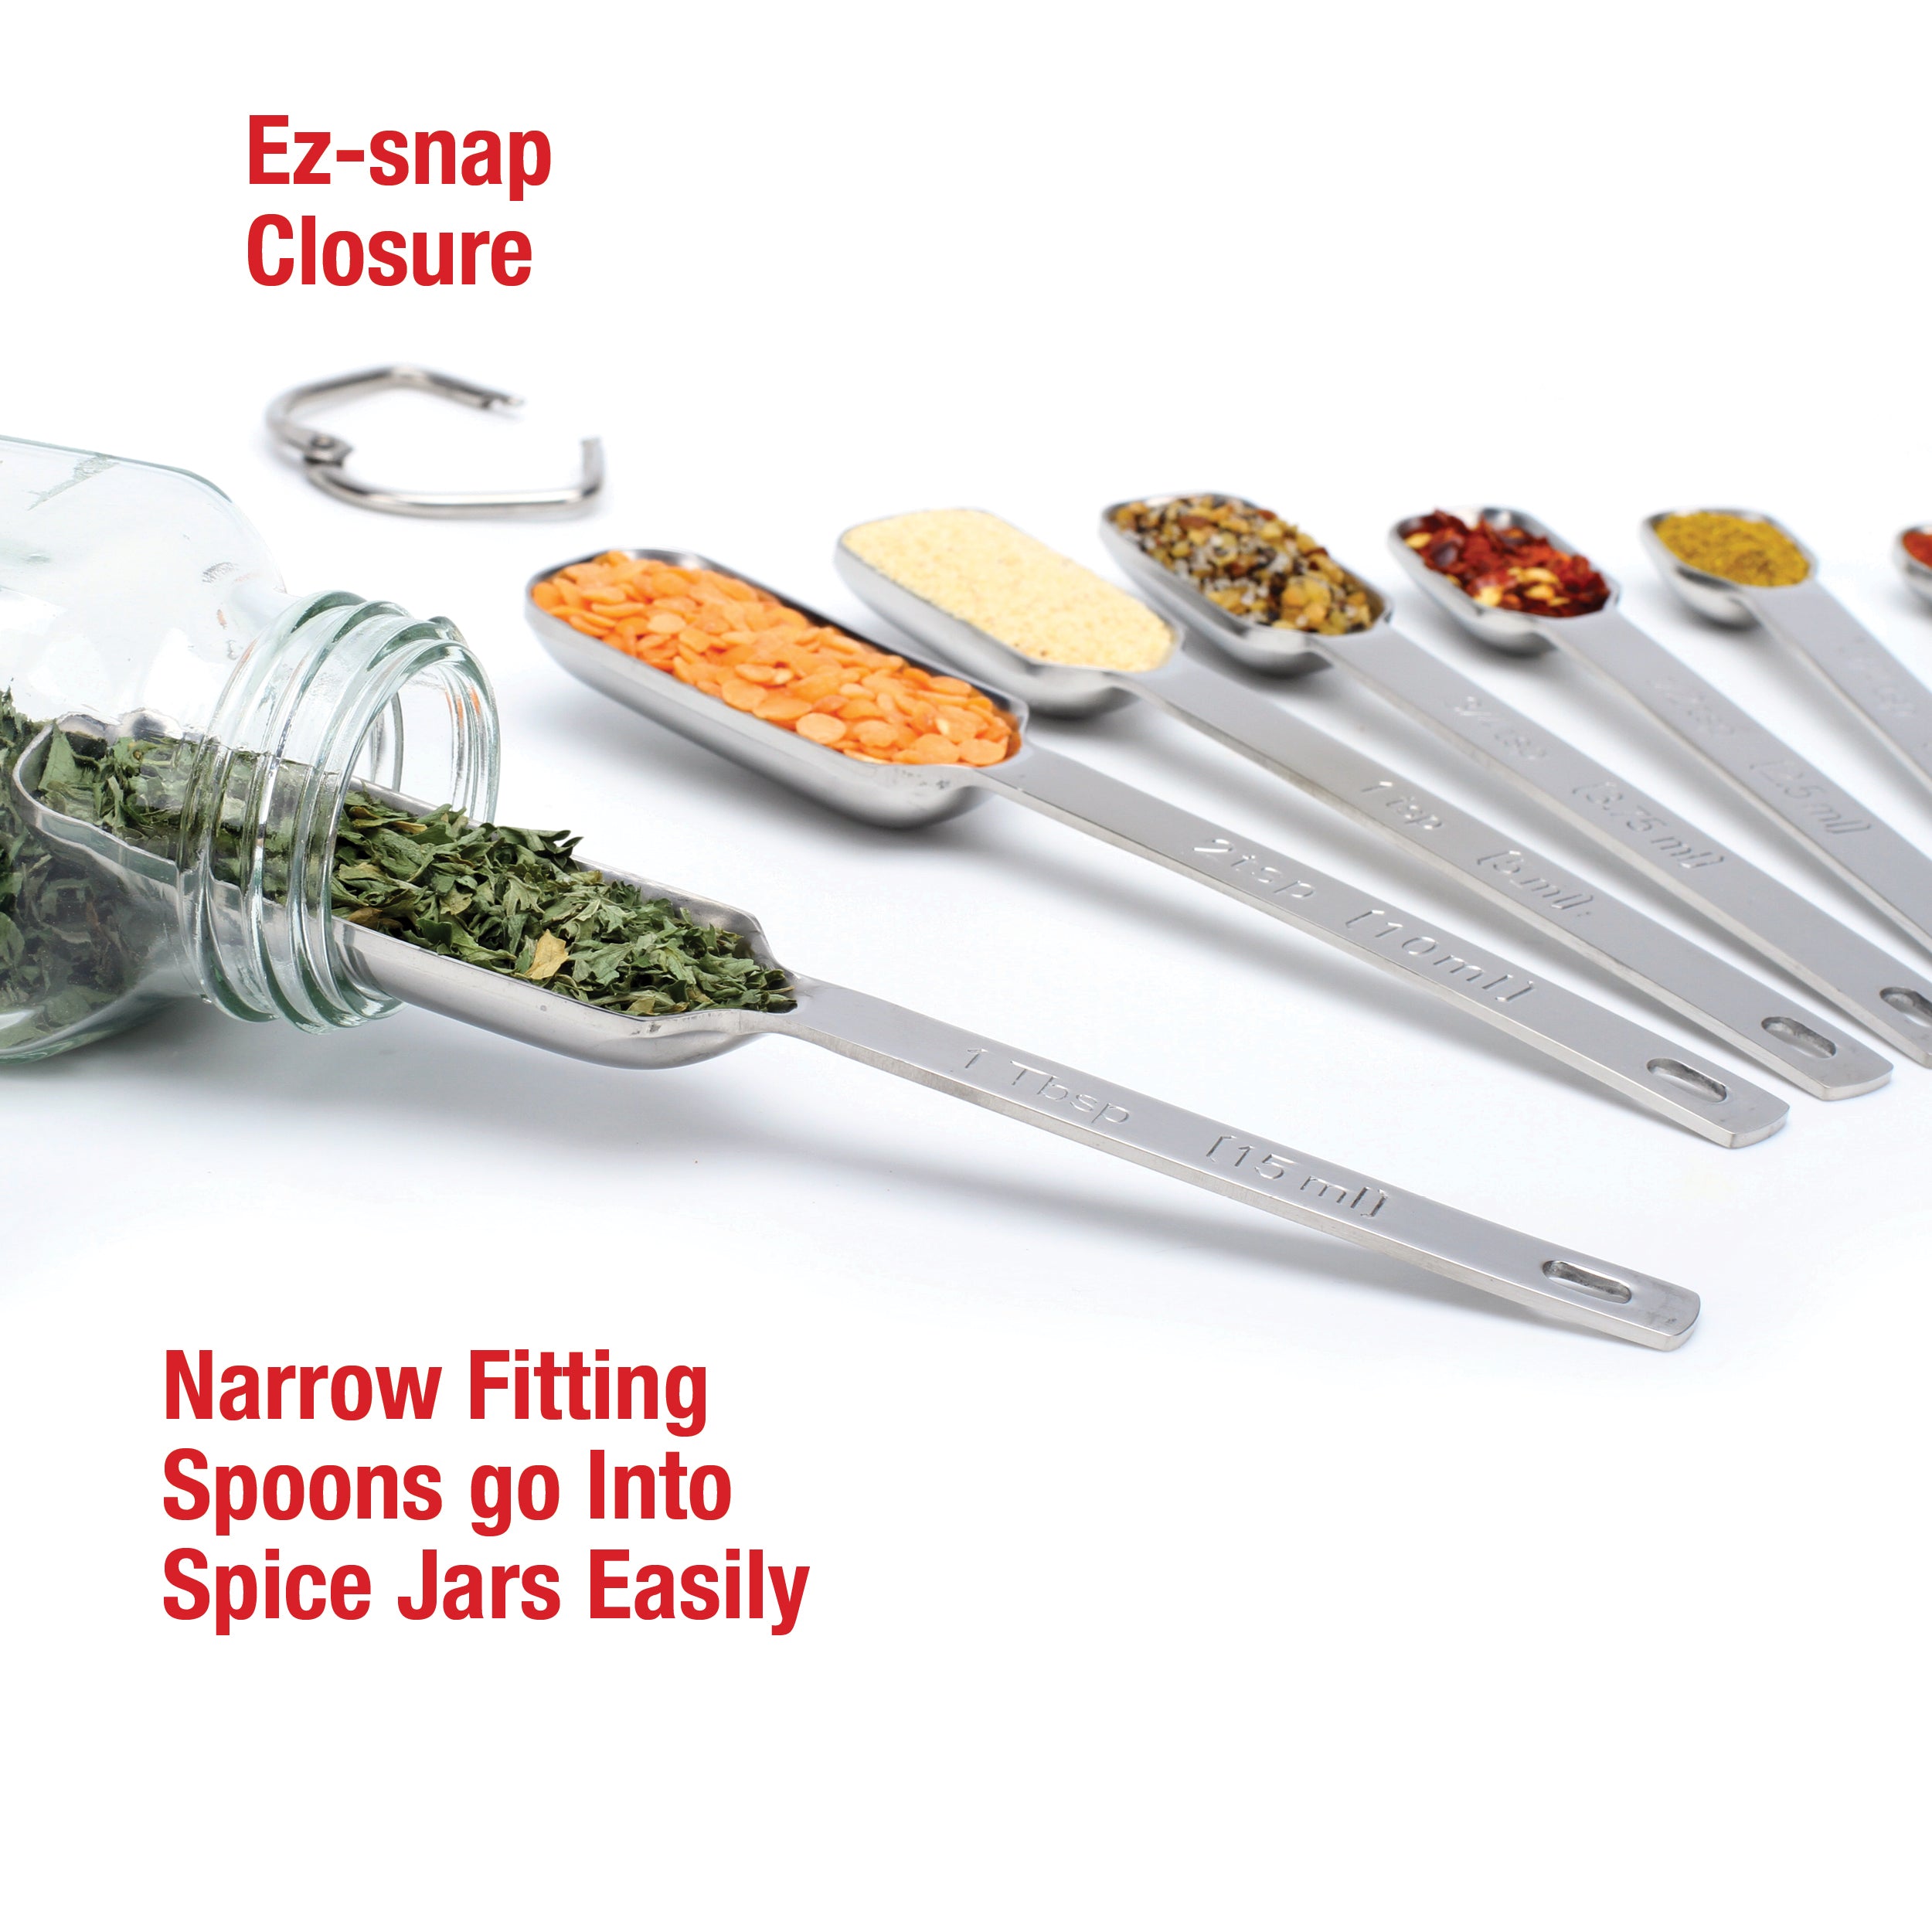 2lbDepot Tablespoon Measuring Spoon tbsp, Heavy-Duty Stainless Steel,  Narrow, Long Handle Fits in Spice Jar, One Table Spoon.